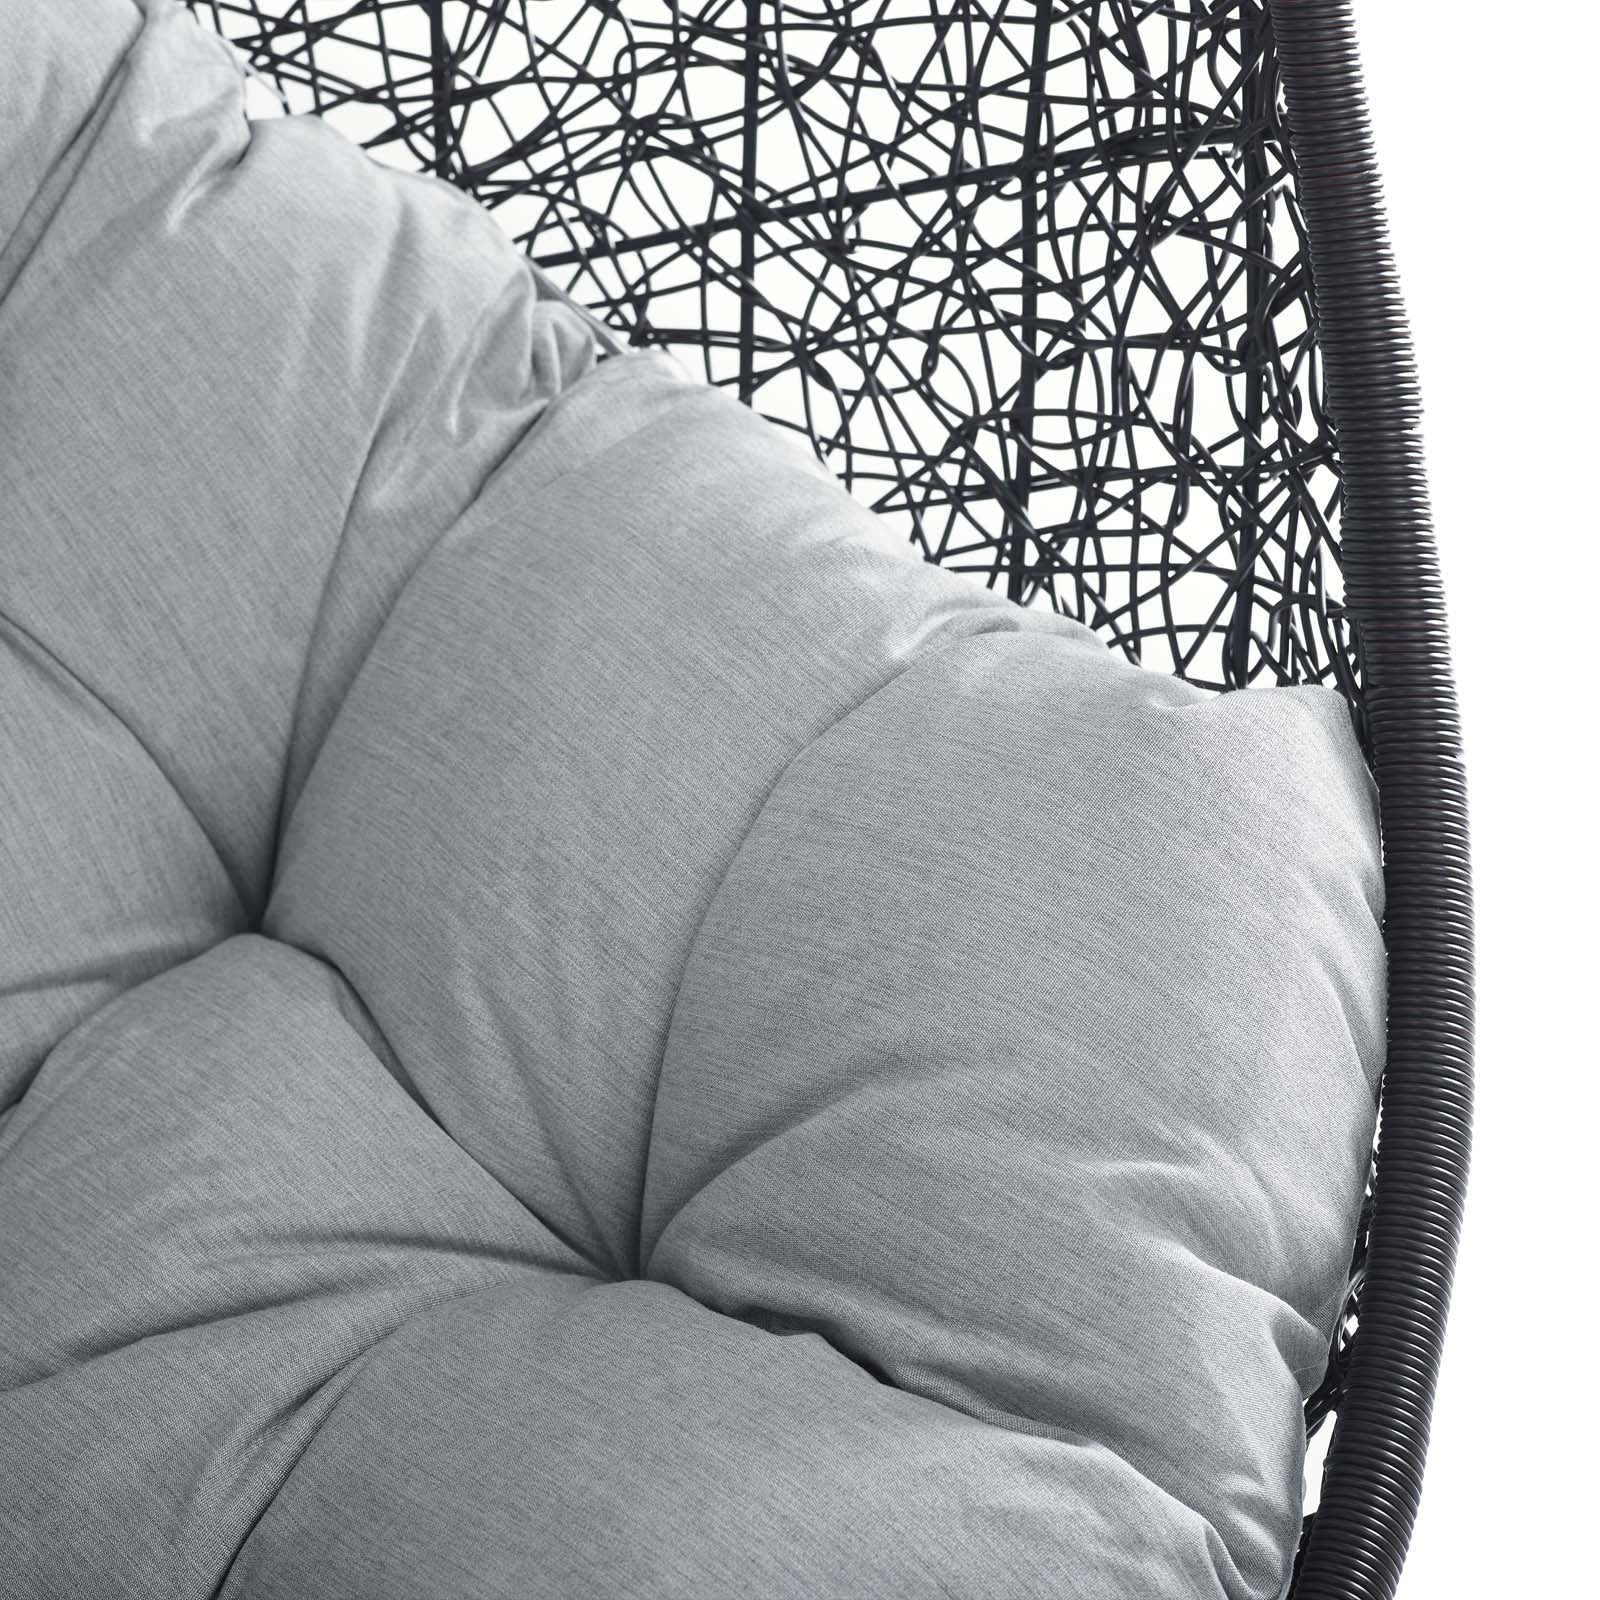 Modway Outdoor Swings - Encase Swing Outdoor Patio Lounge Chair Black & Gray